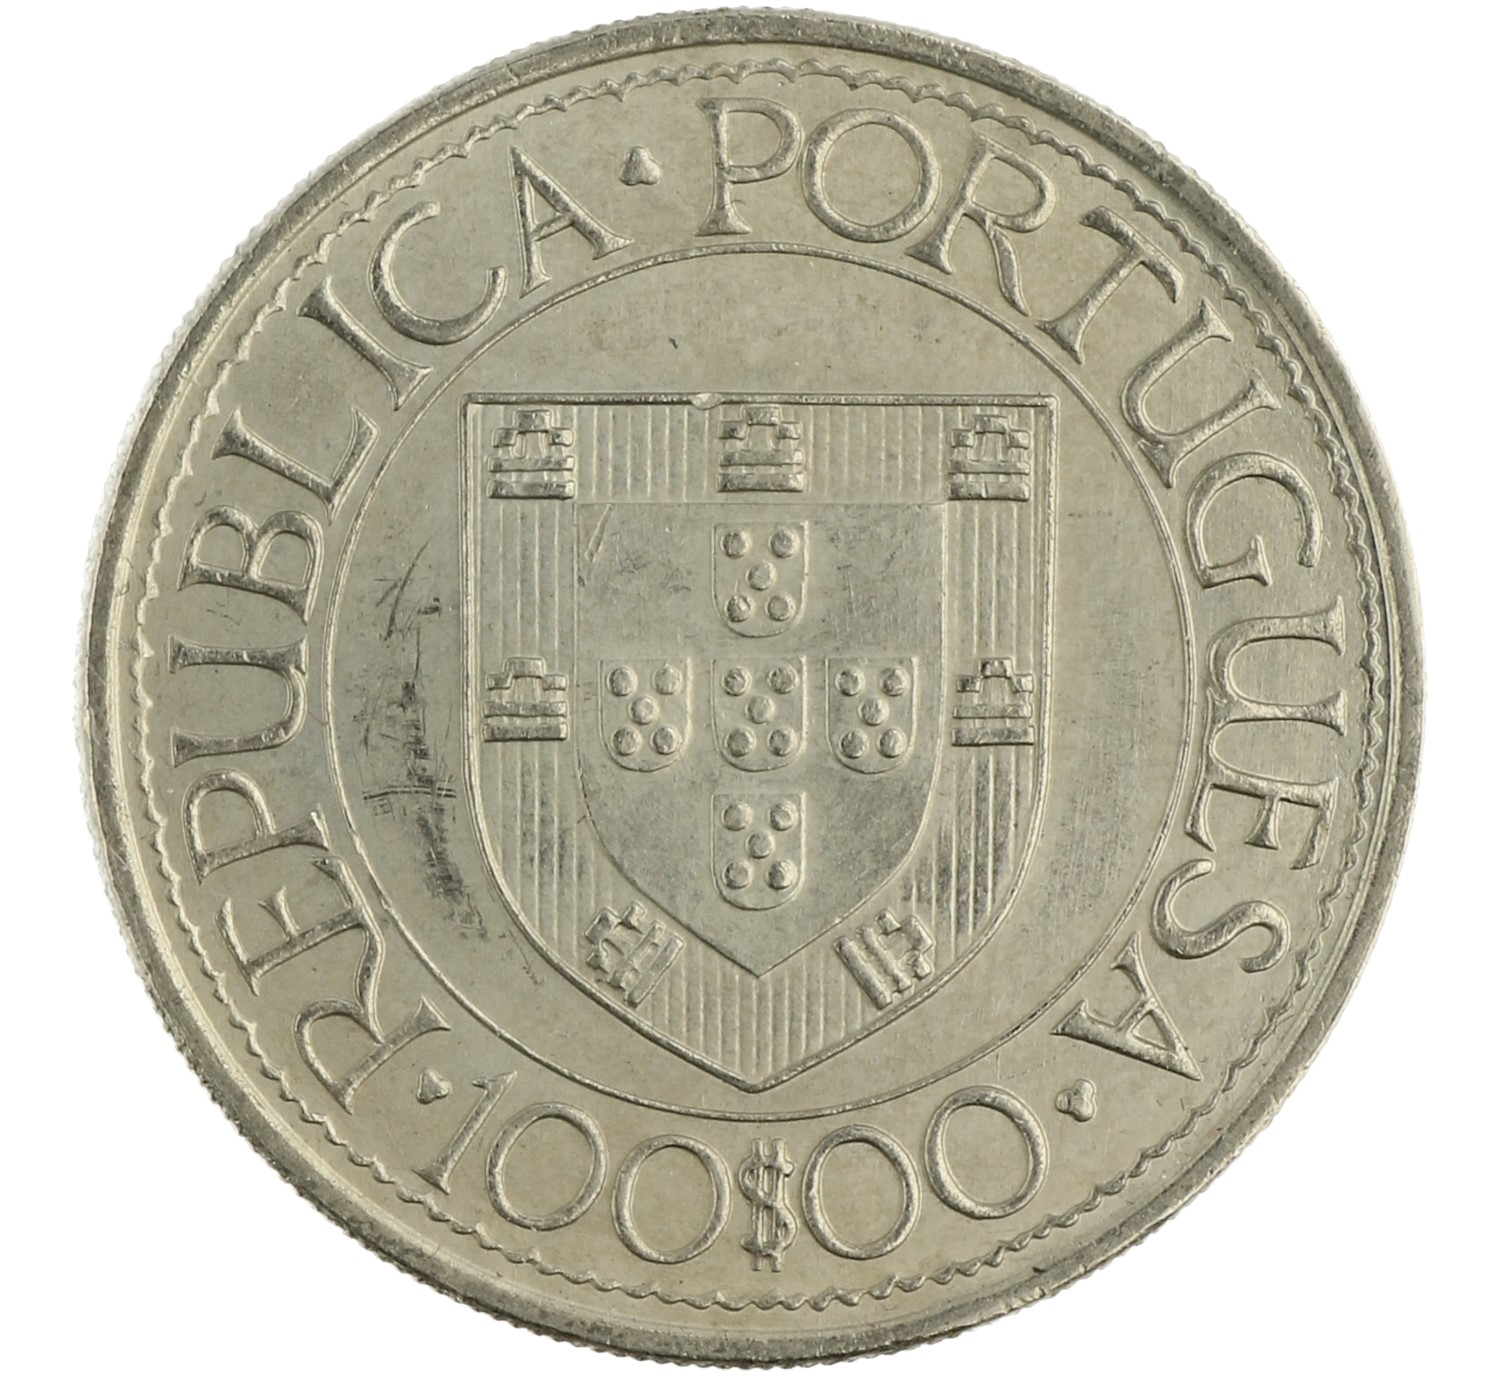 100 Escudos - Portugal - 1988